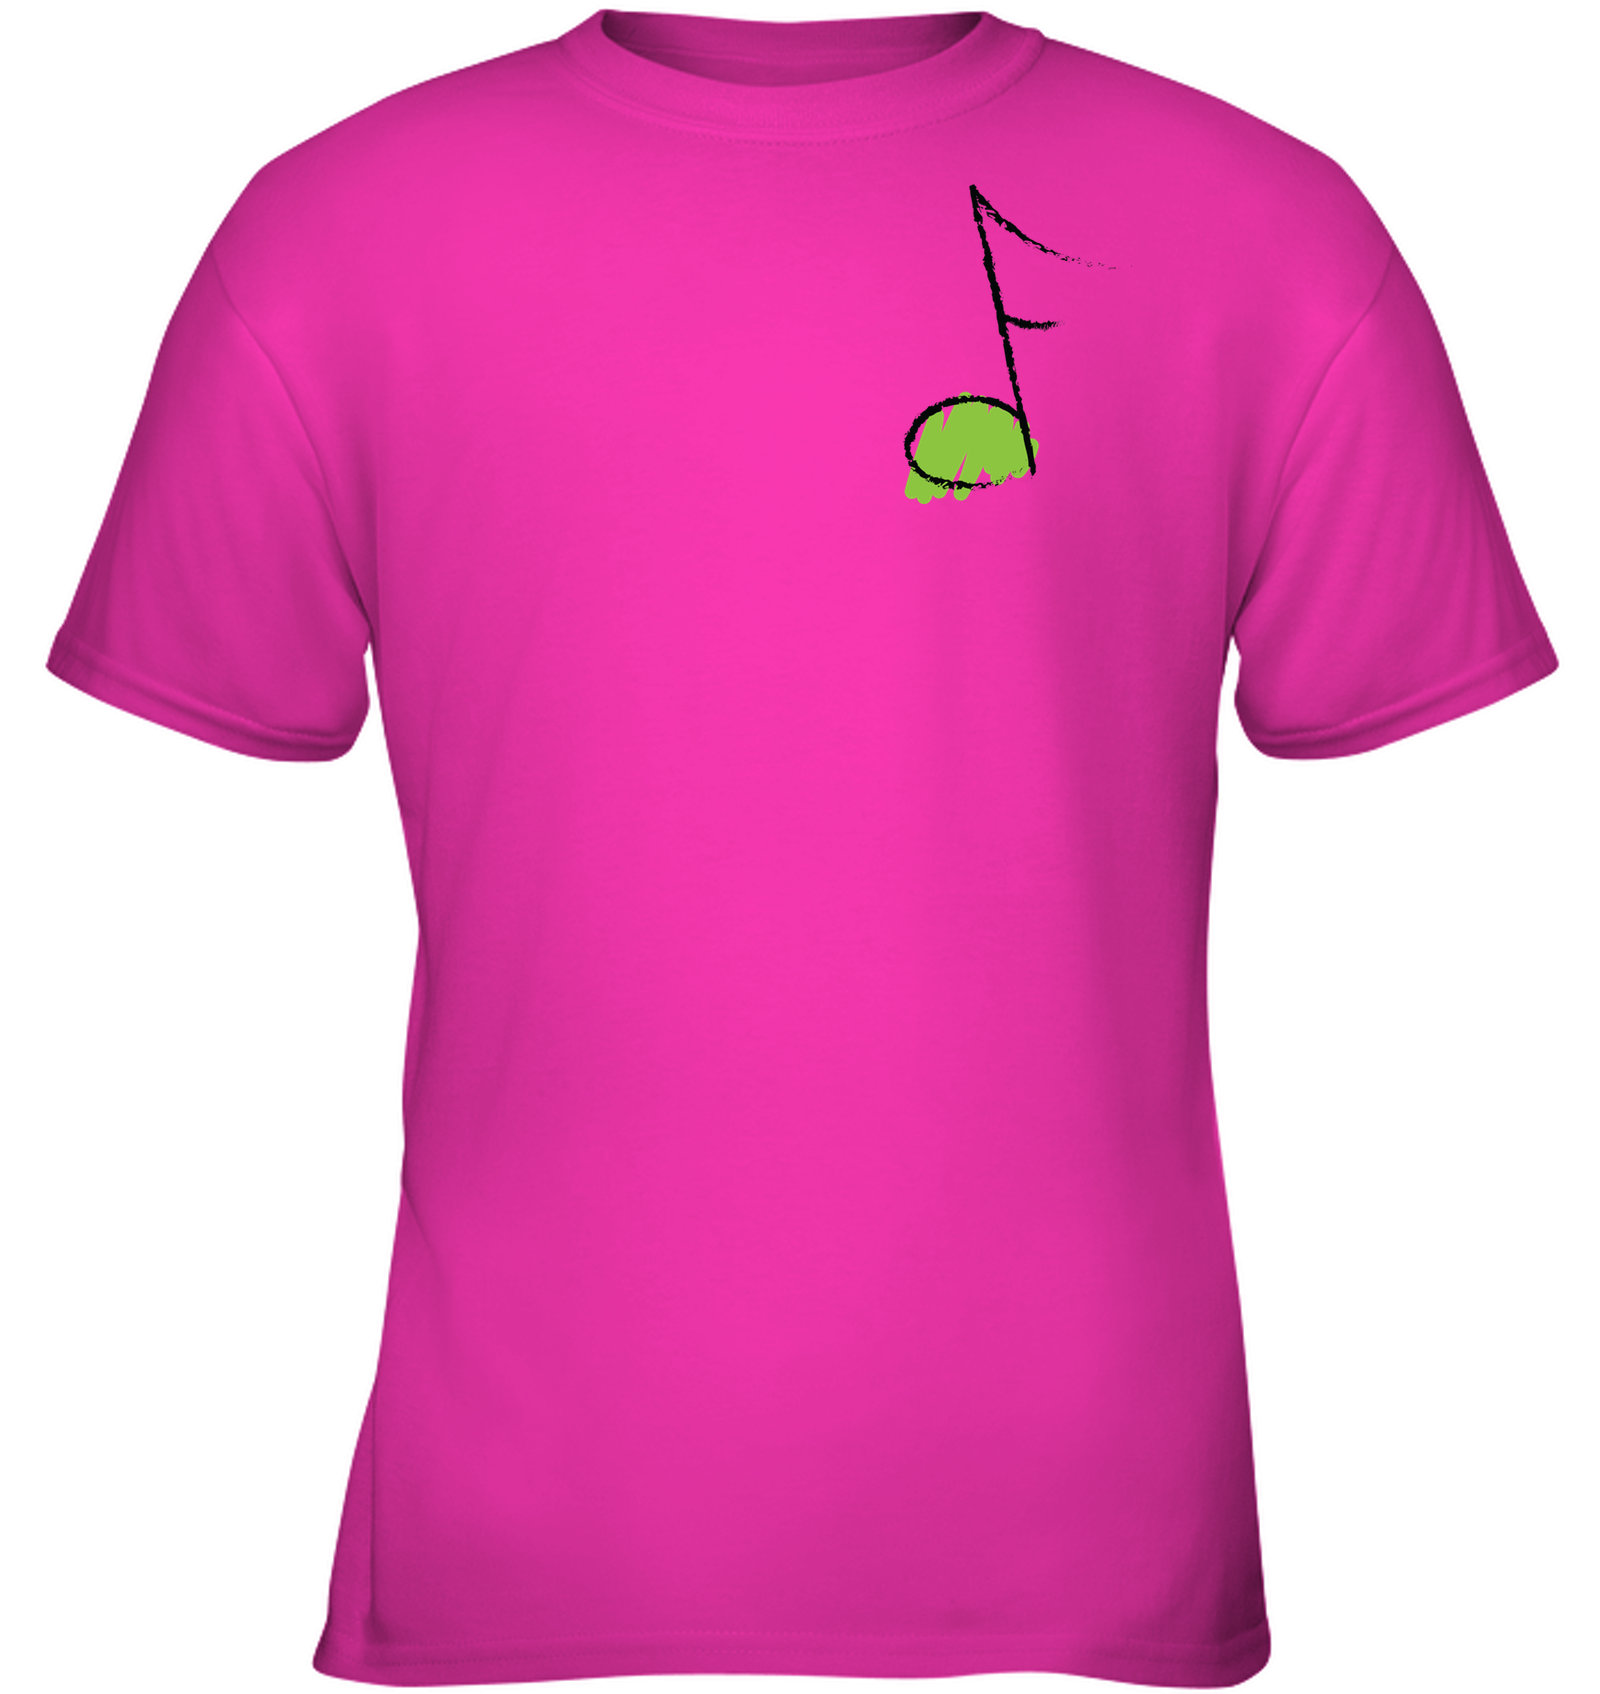 Green Note (Pocket Size) - Gildan Youth Short Sleeve T-Shirt